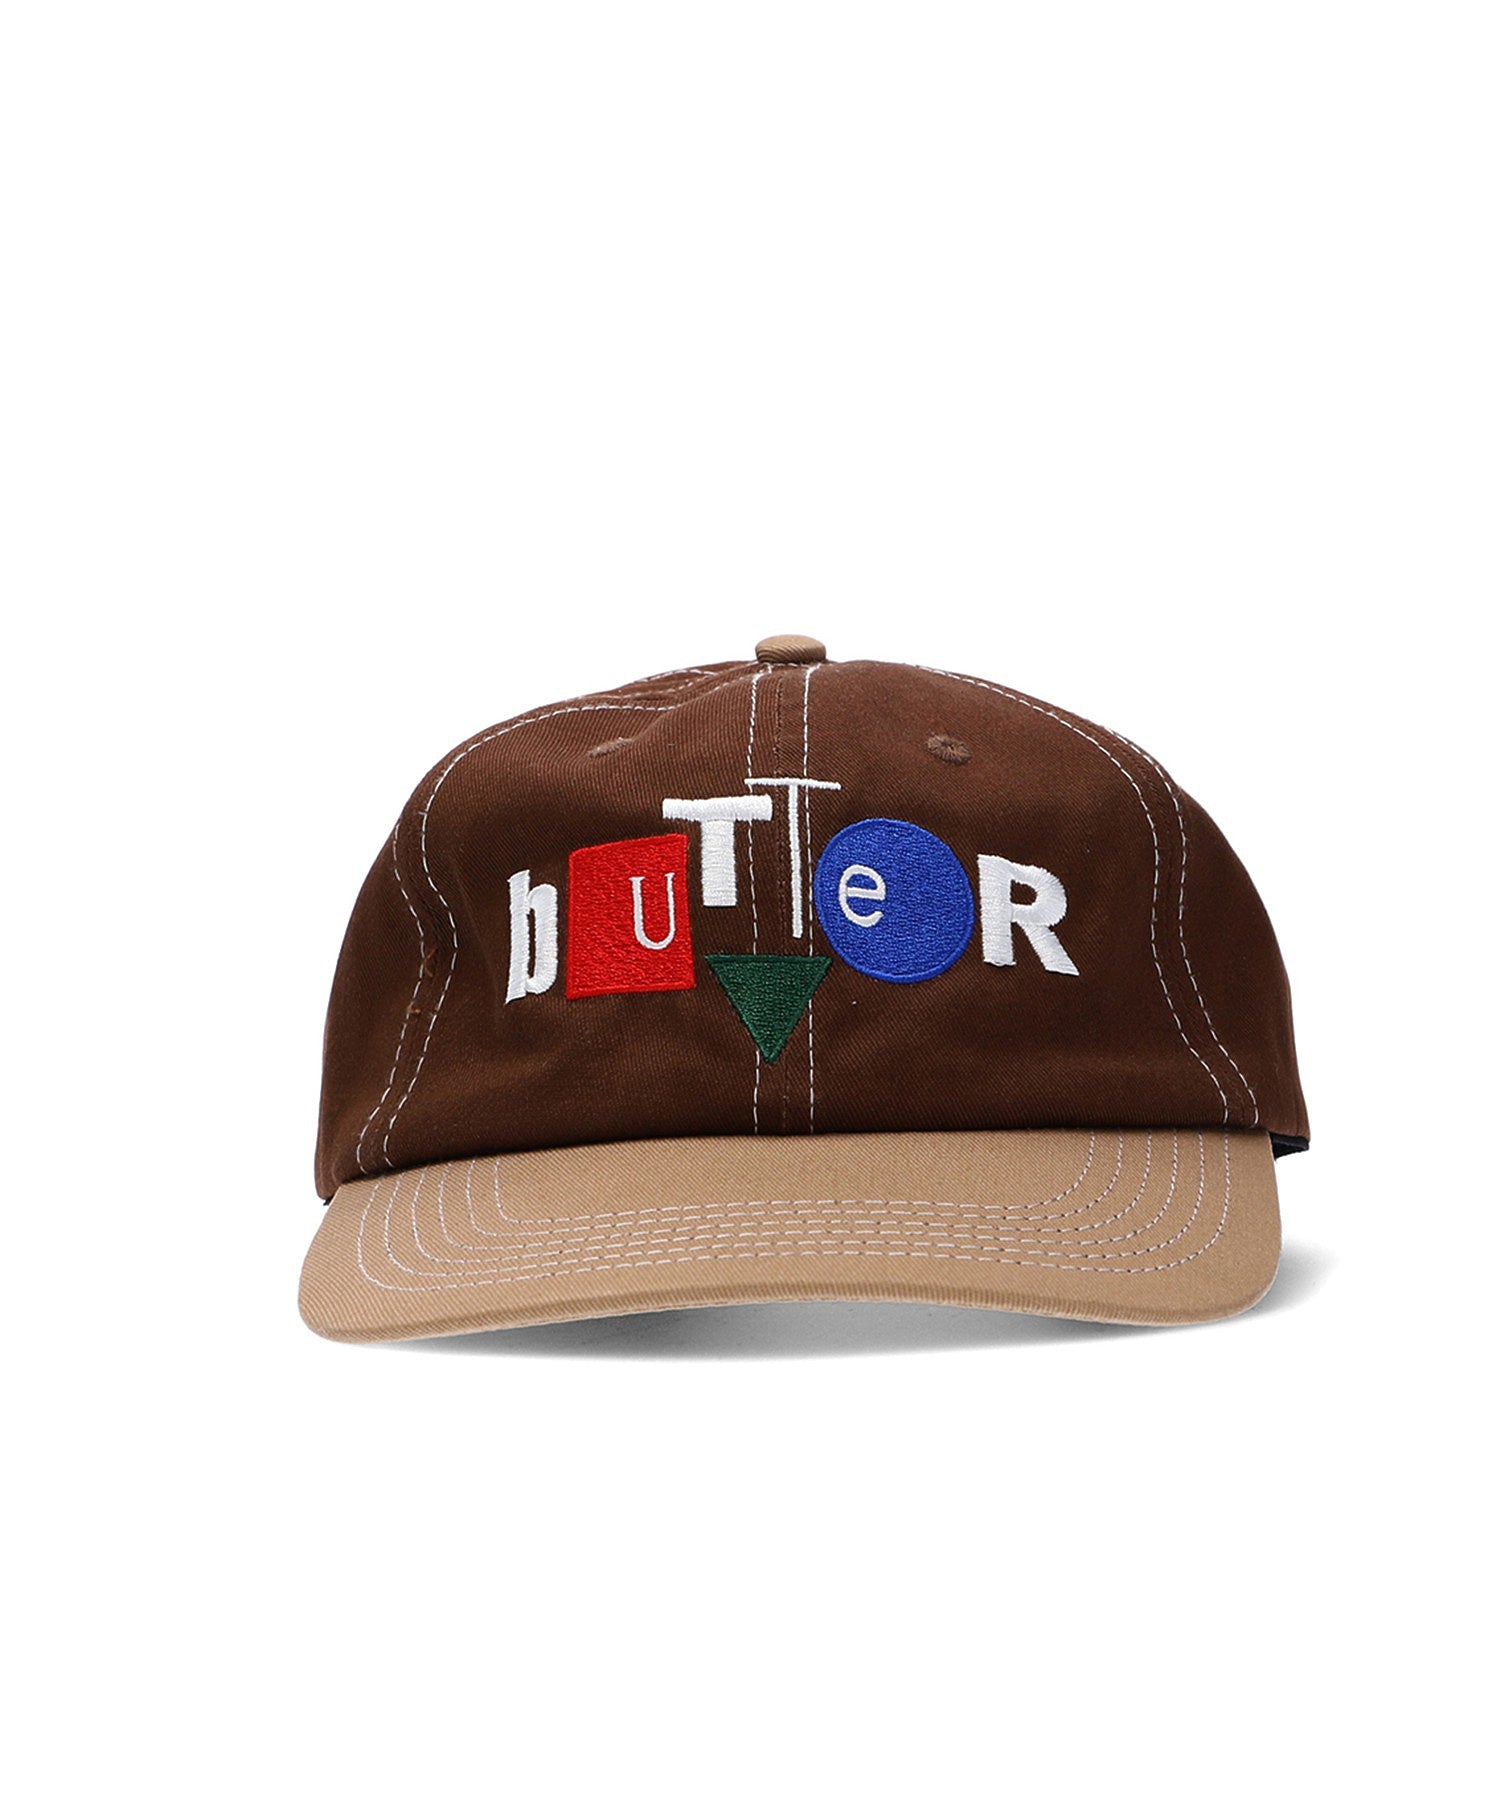 BUTTER/バター/Design Co 6 Panel Cap